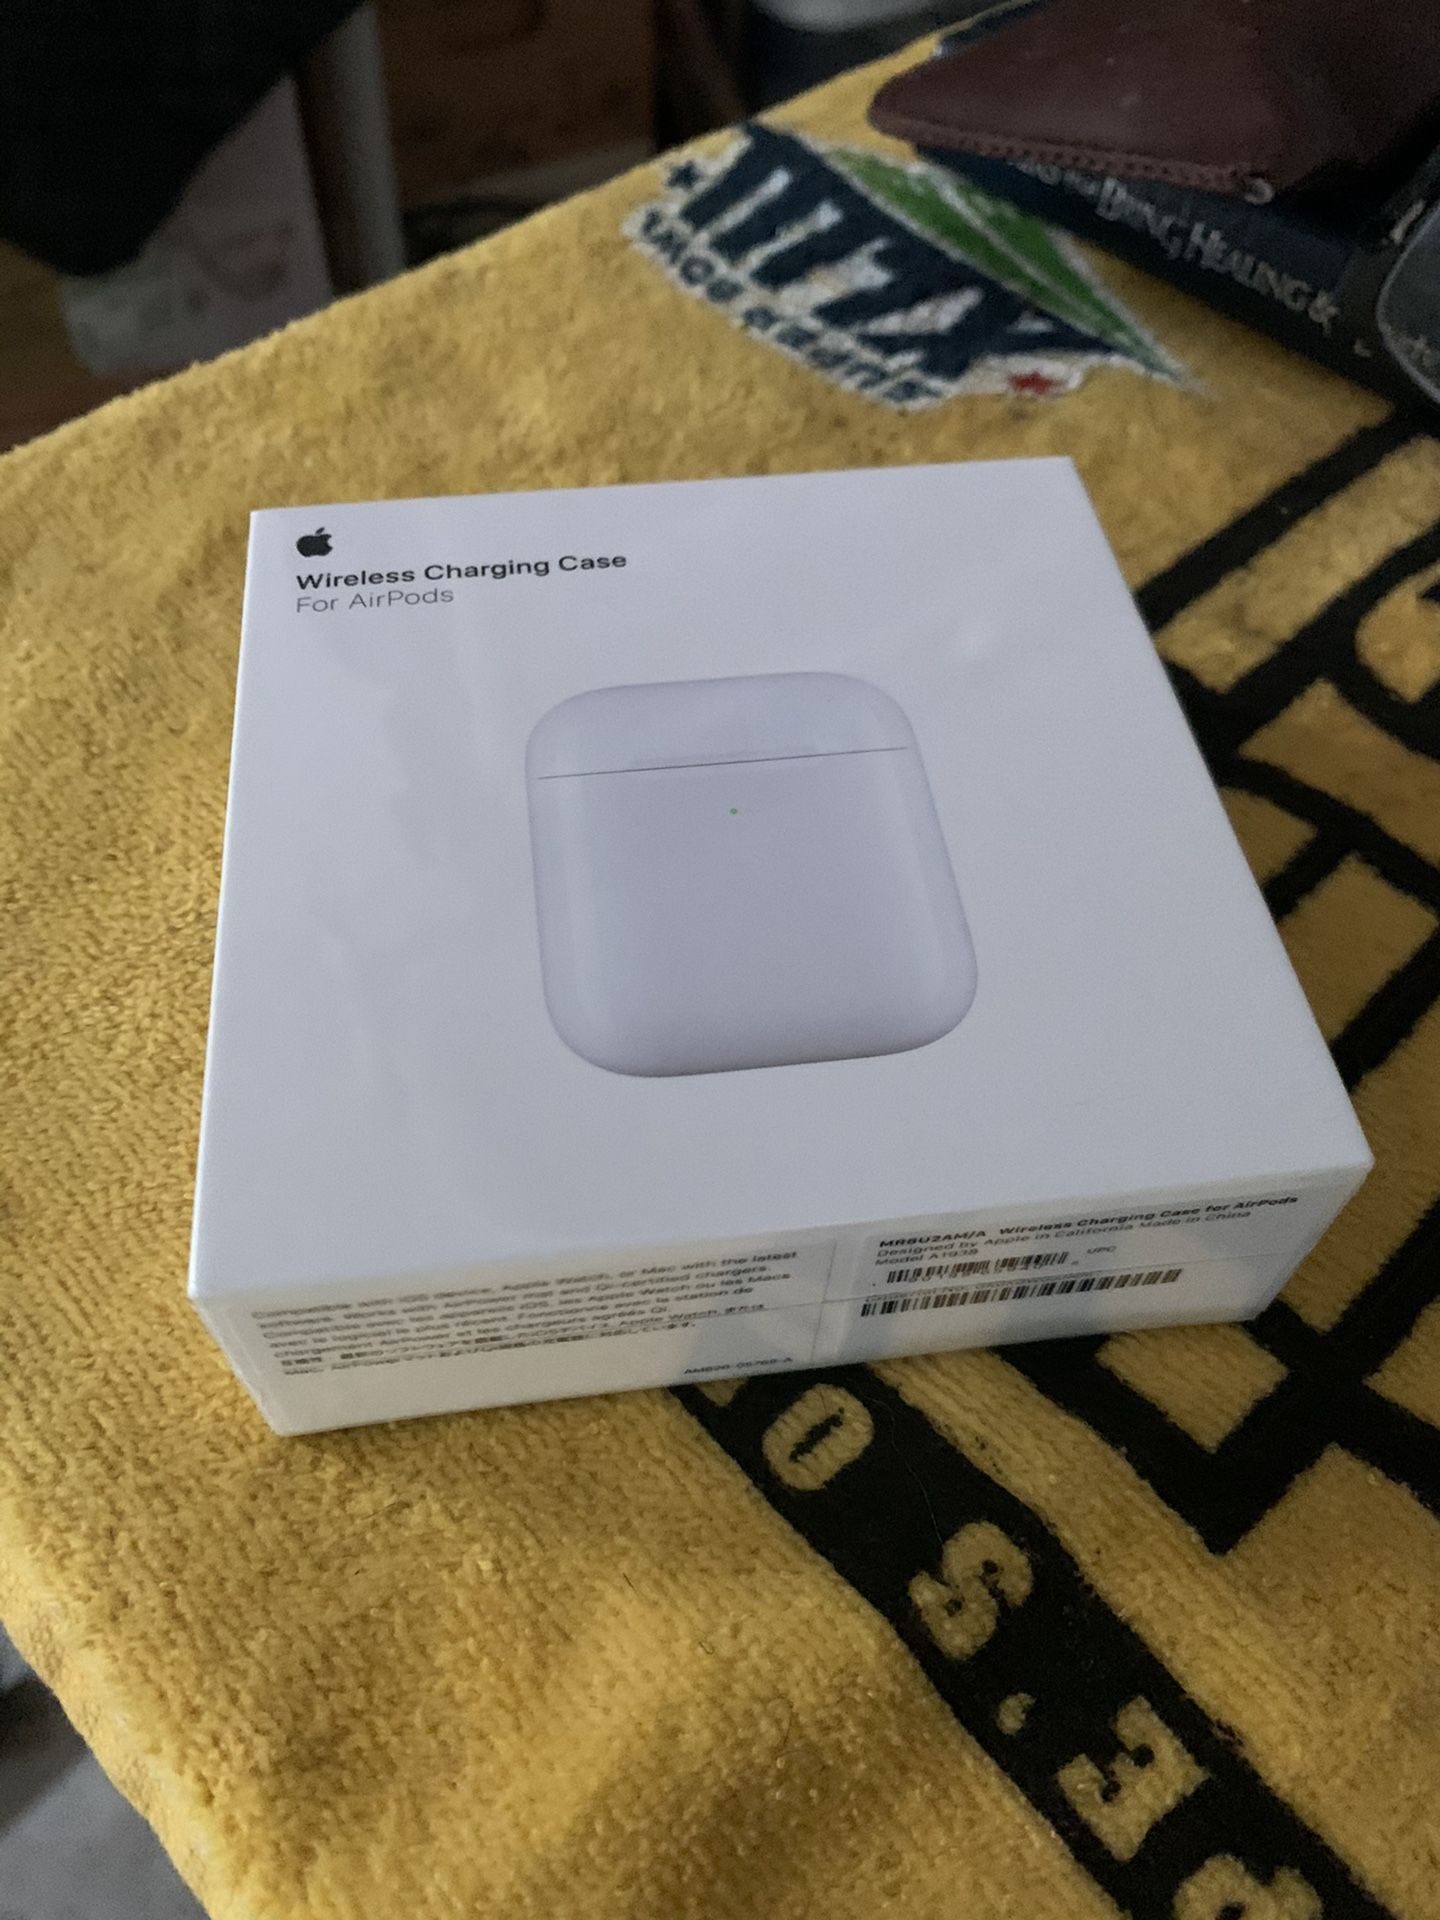 Apple AirPod wireless charging case